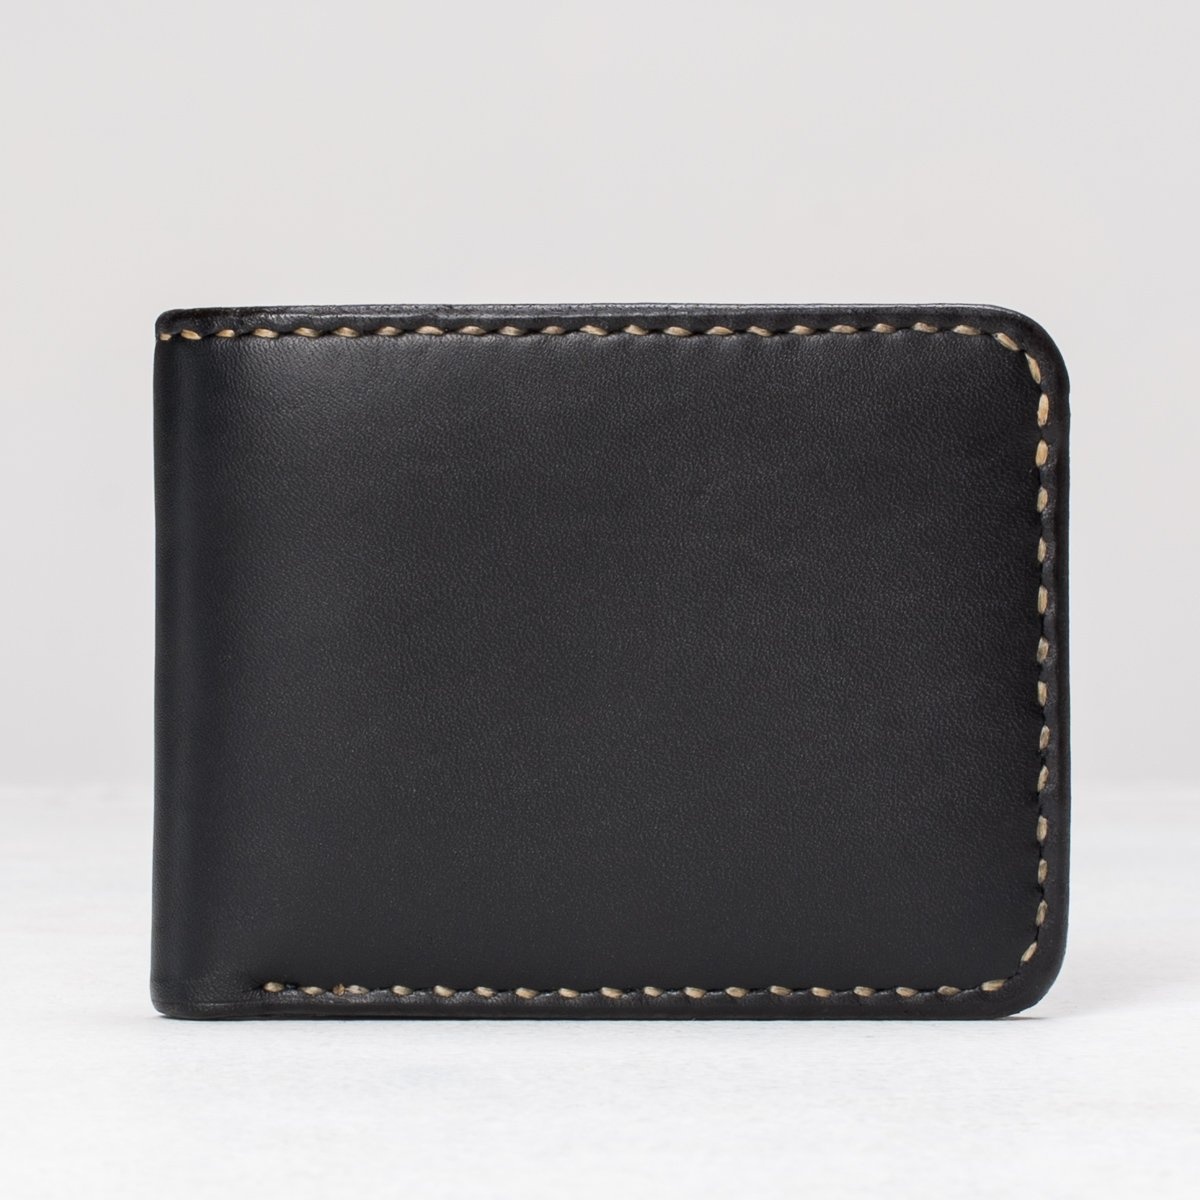 IHG-035 Calf Folding Wallet - Black or Tan - 7